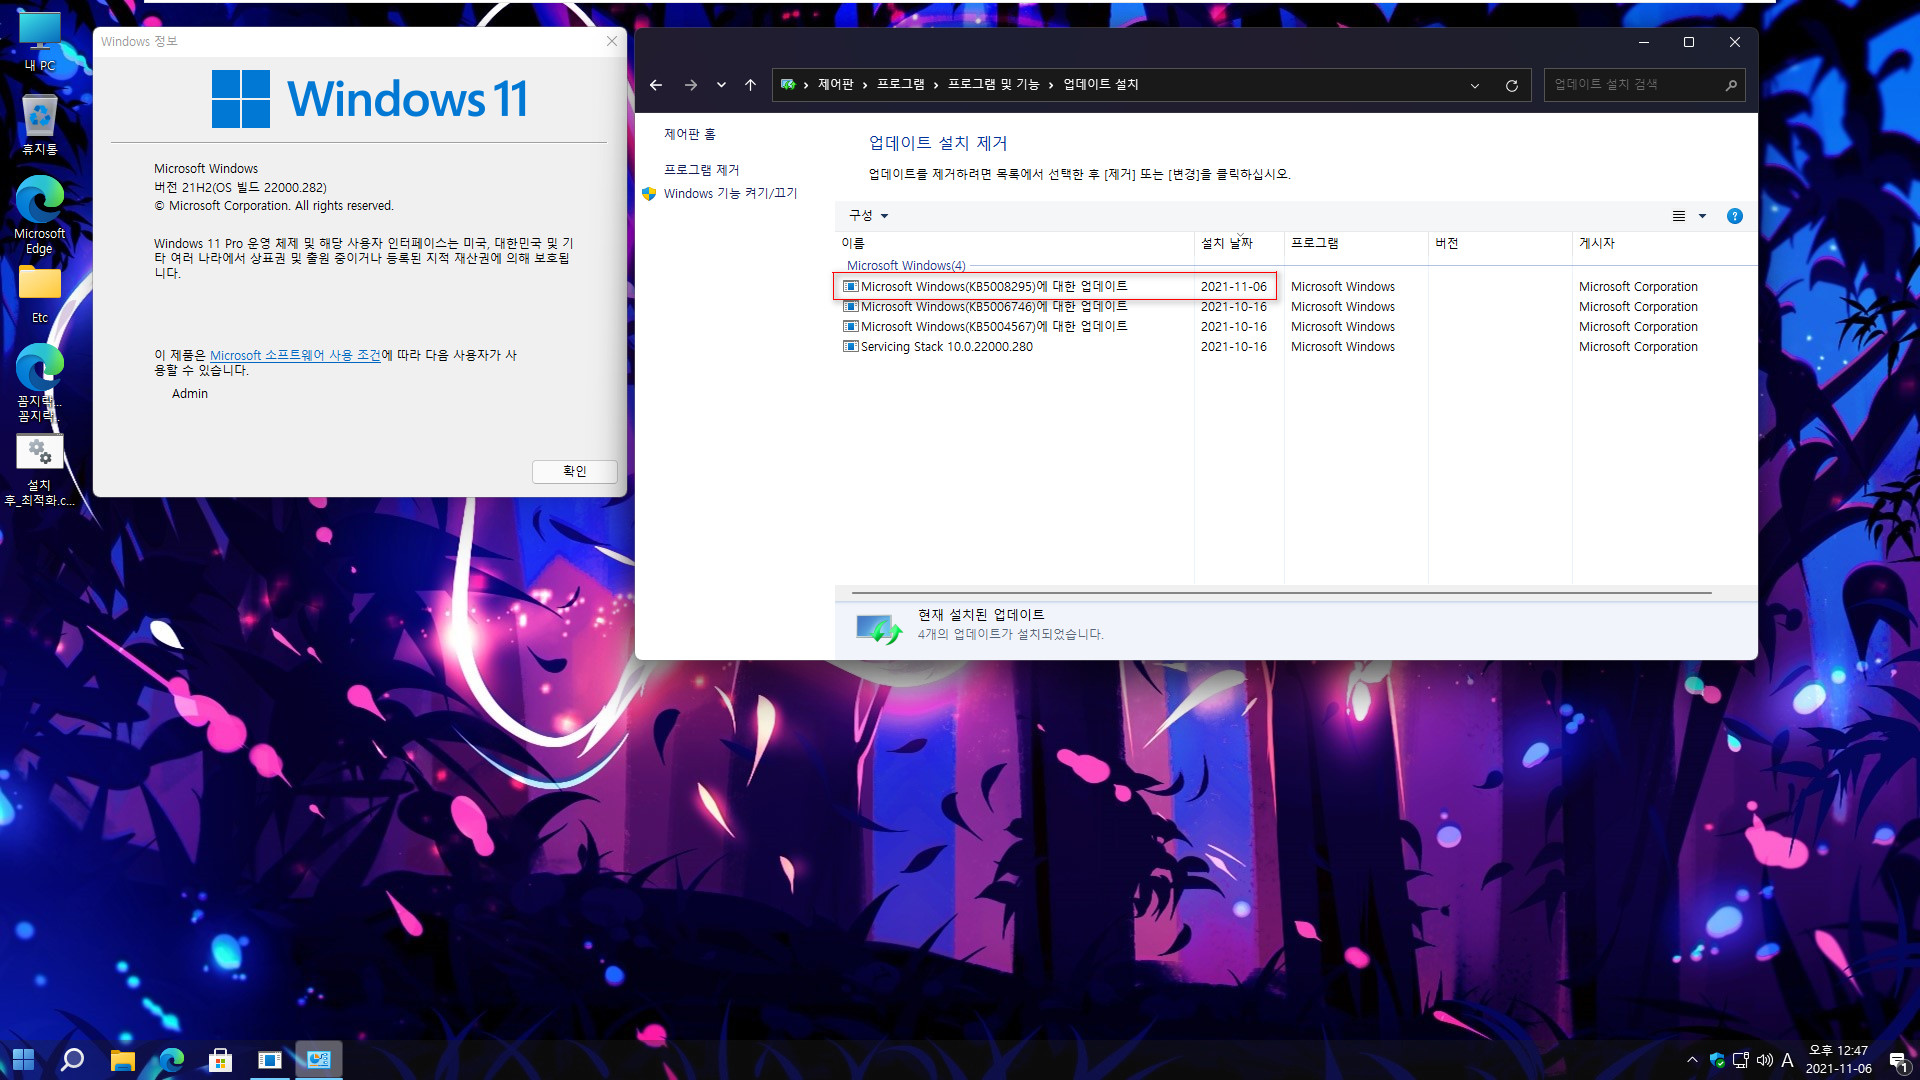 Windows 11 Pro (22000.282) FBConan_Phoenix_20211106.vhd 설치 테스트 2021-11-06_124711.jpg